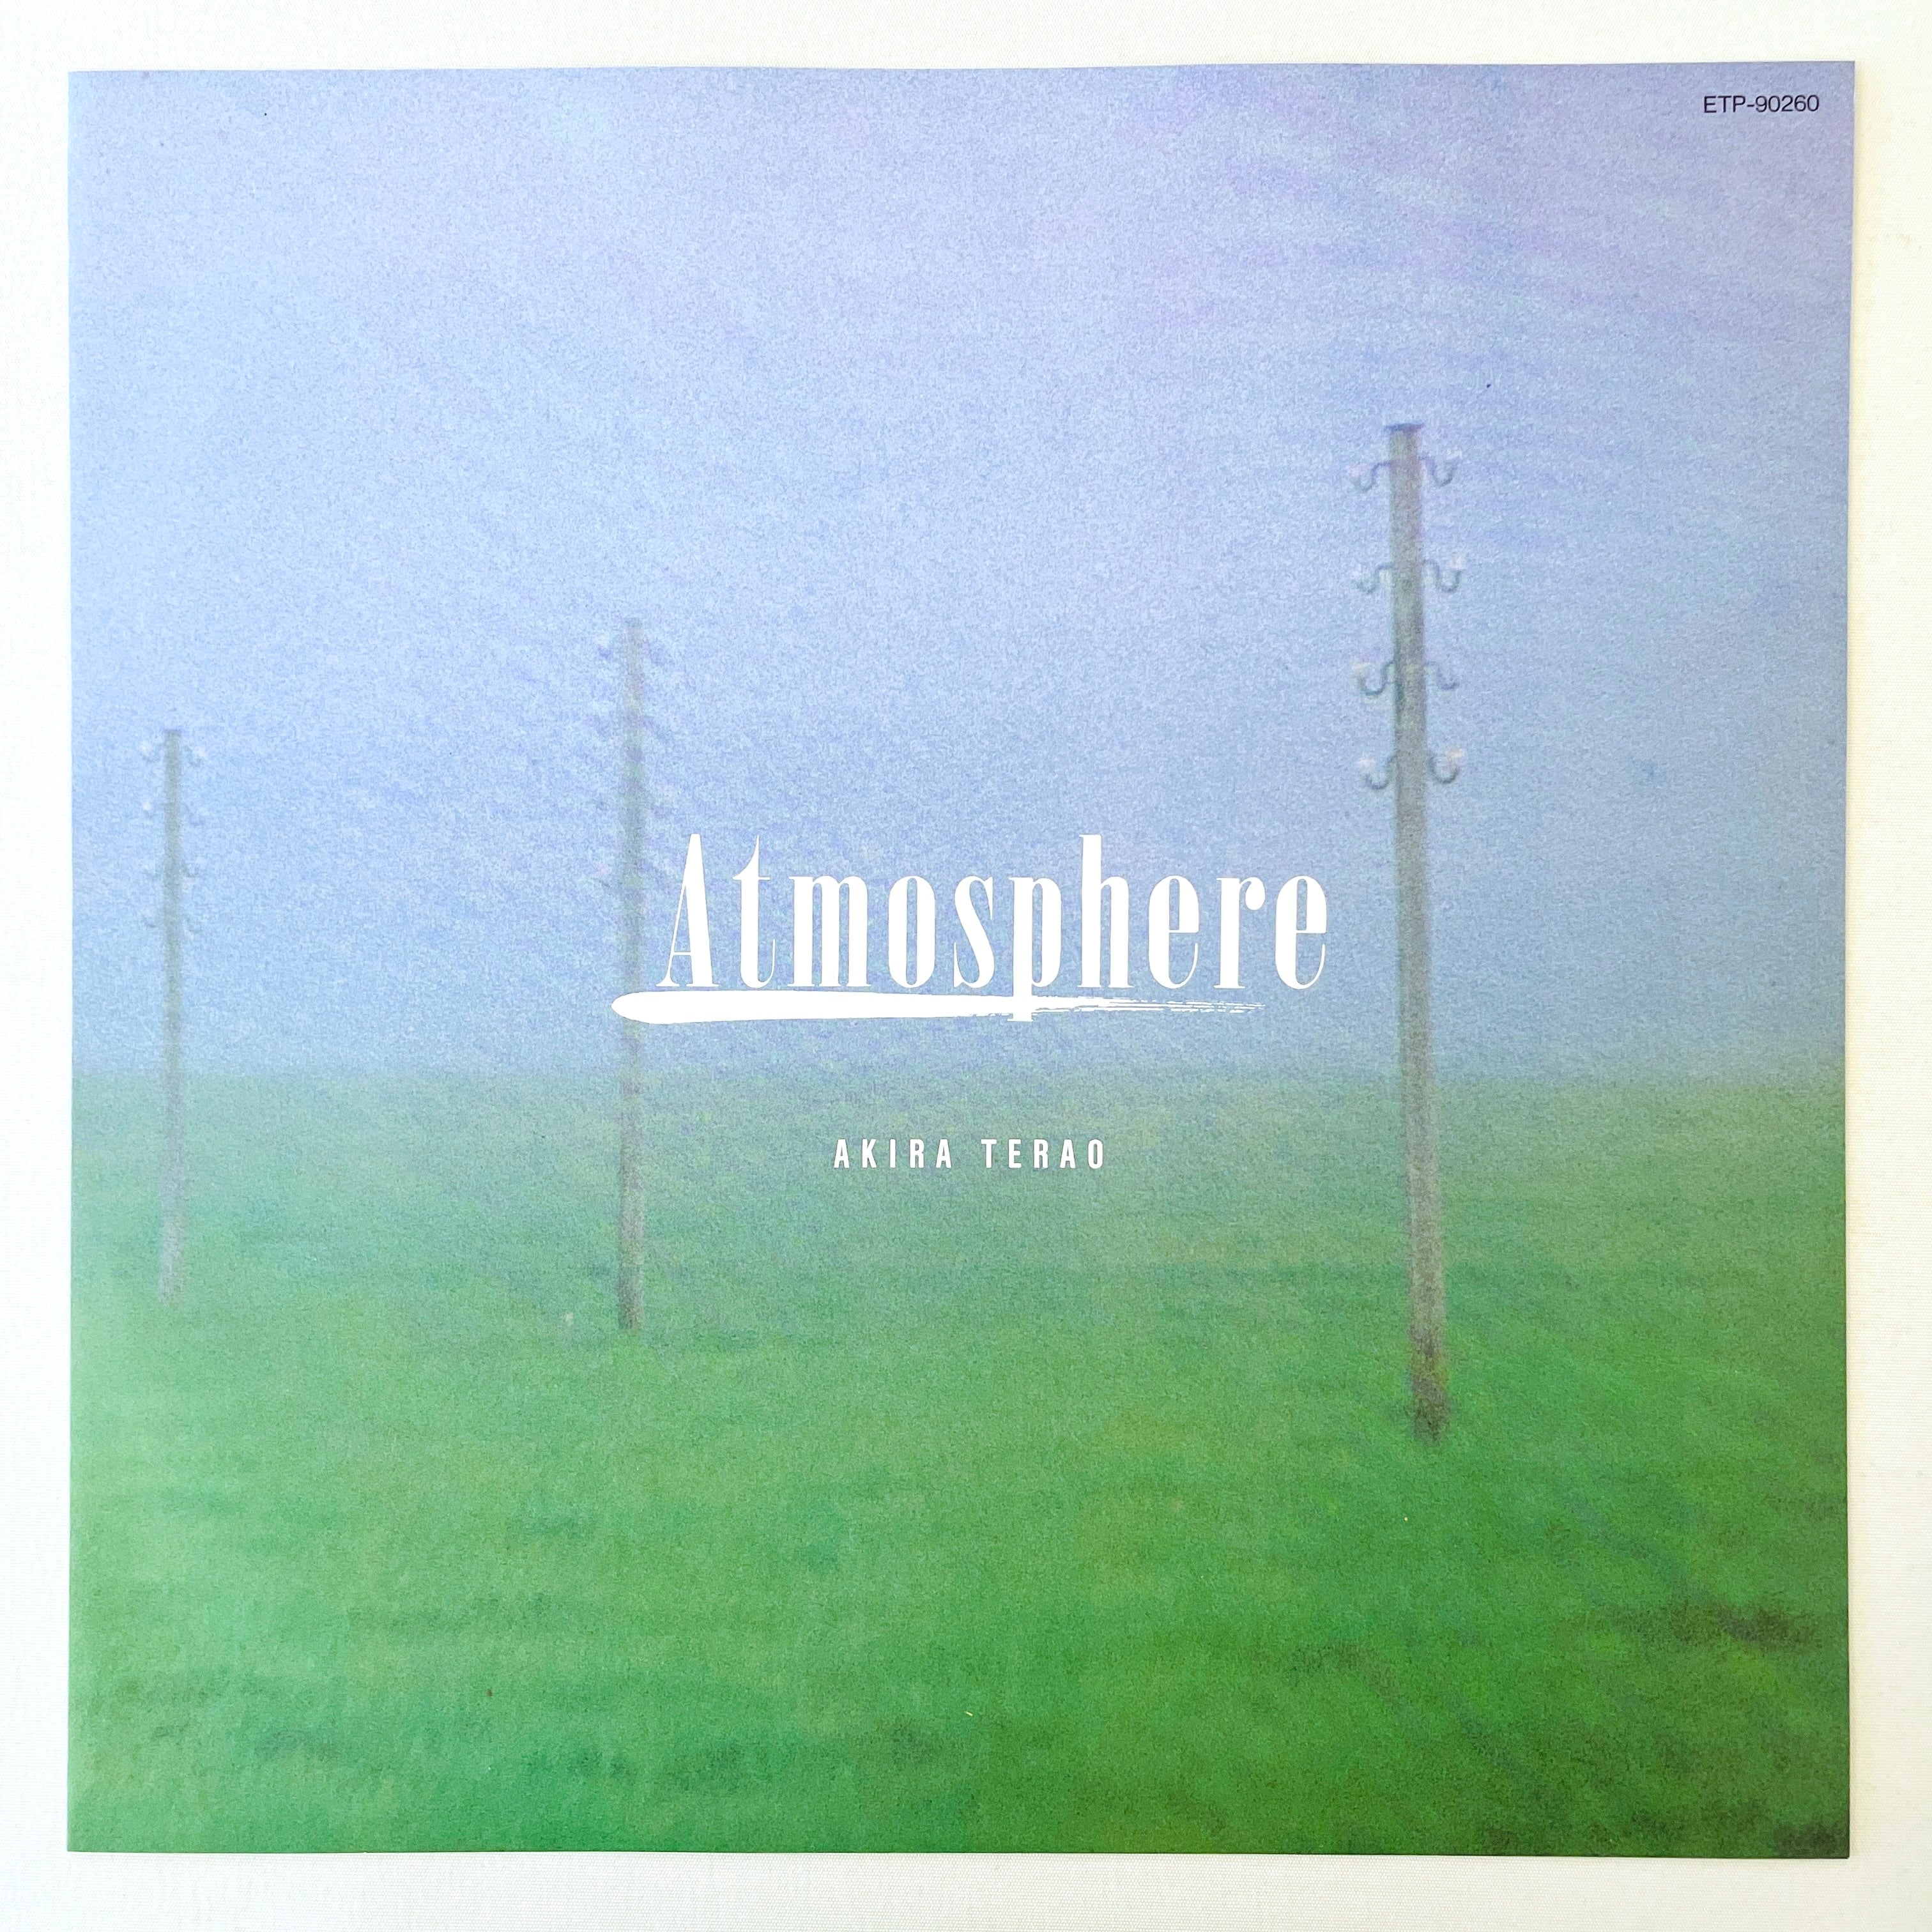 Akira Terao – Atmosphere (Original) – Portal Records